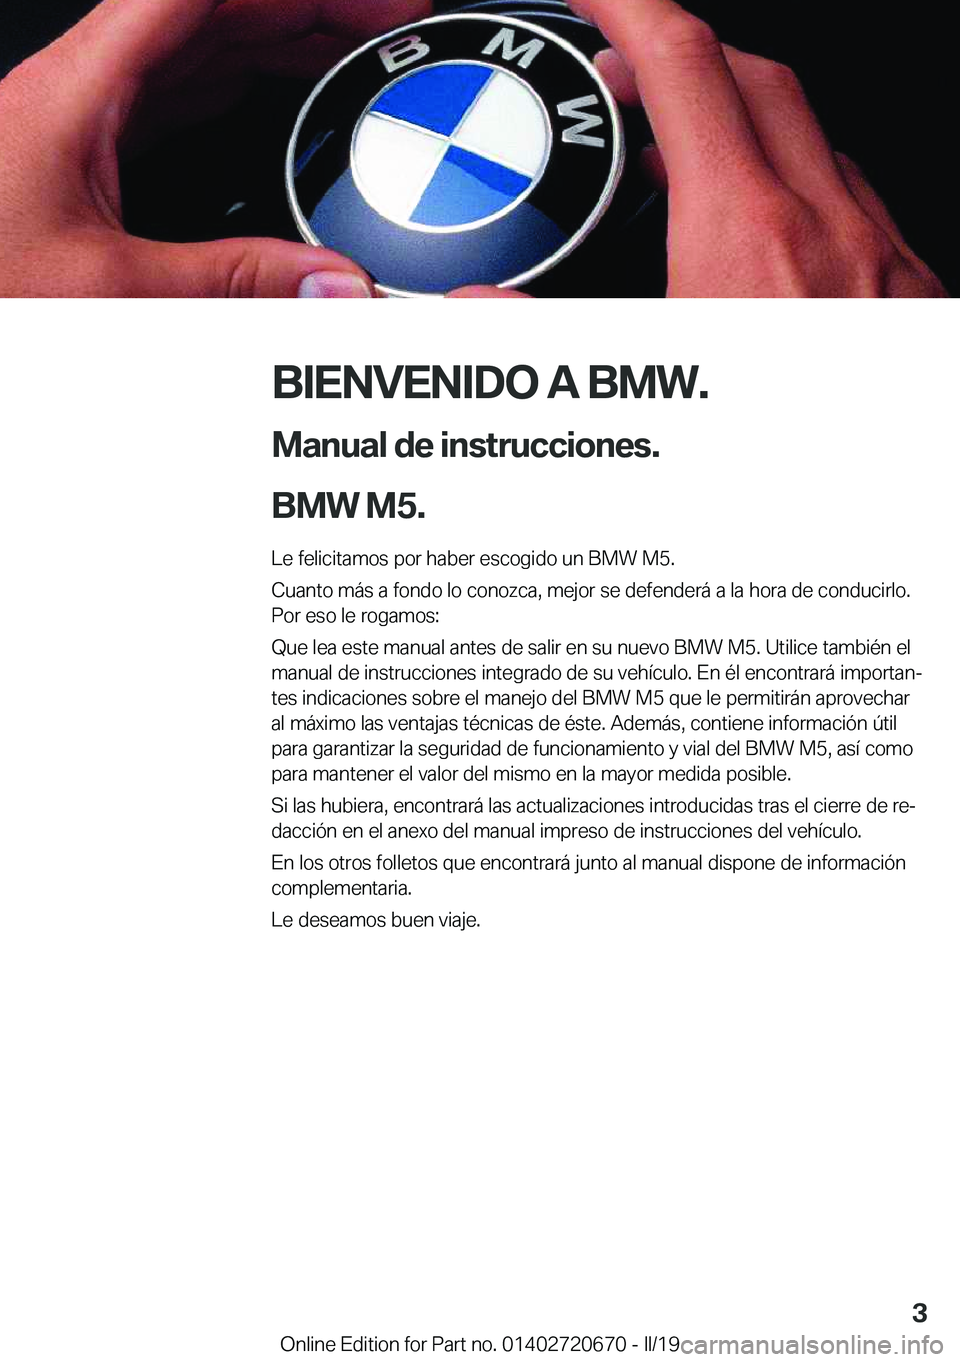 BMW M5 2019  Manuales de Empleo (in Spanish) �B�I�E�N�V�E�N�I�D�O��A��B�M�W�.
�M�a�n�u�a�l��d�e��i�n�s�t�r�u�c�c�i�o�n�e�s�.
�B�M�W��M�5�. �L�e��f�e�l�i�c�i�t�a�m�o�s��p�o�r��h�a�b�e�r��e�s�c�o�g�i�d�o��u�n��B�M�W��M�5�.
�C�u�a�n�t�o